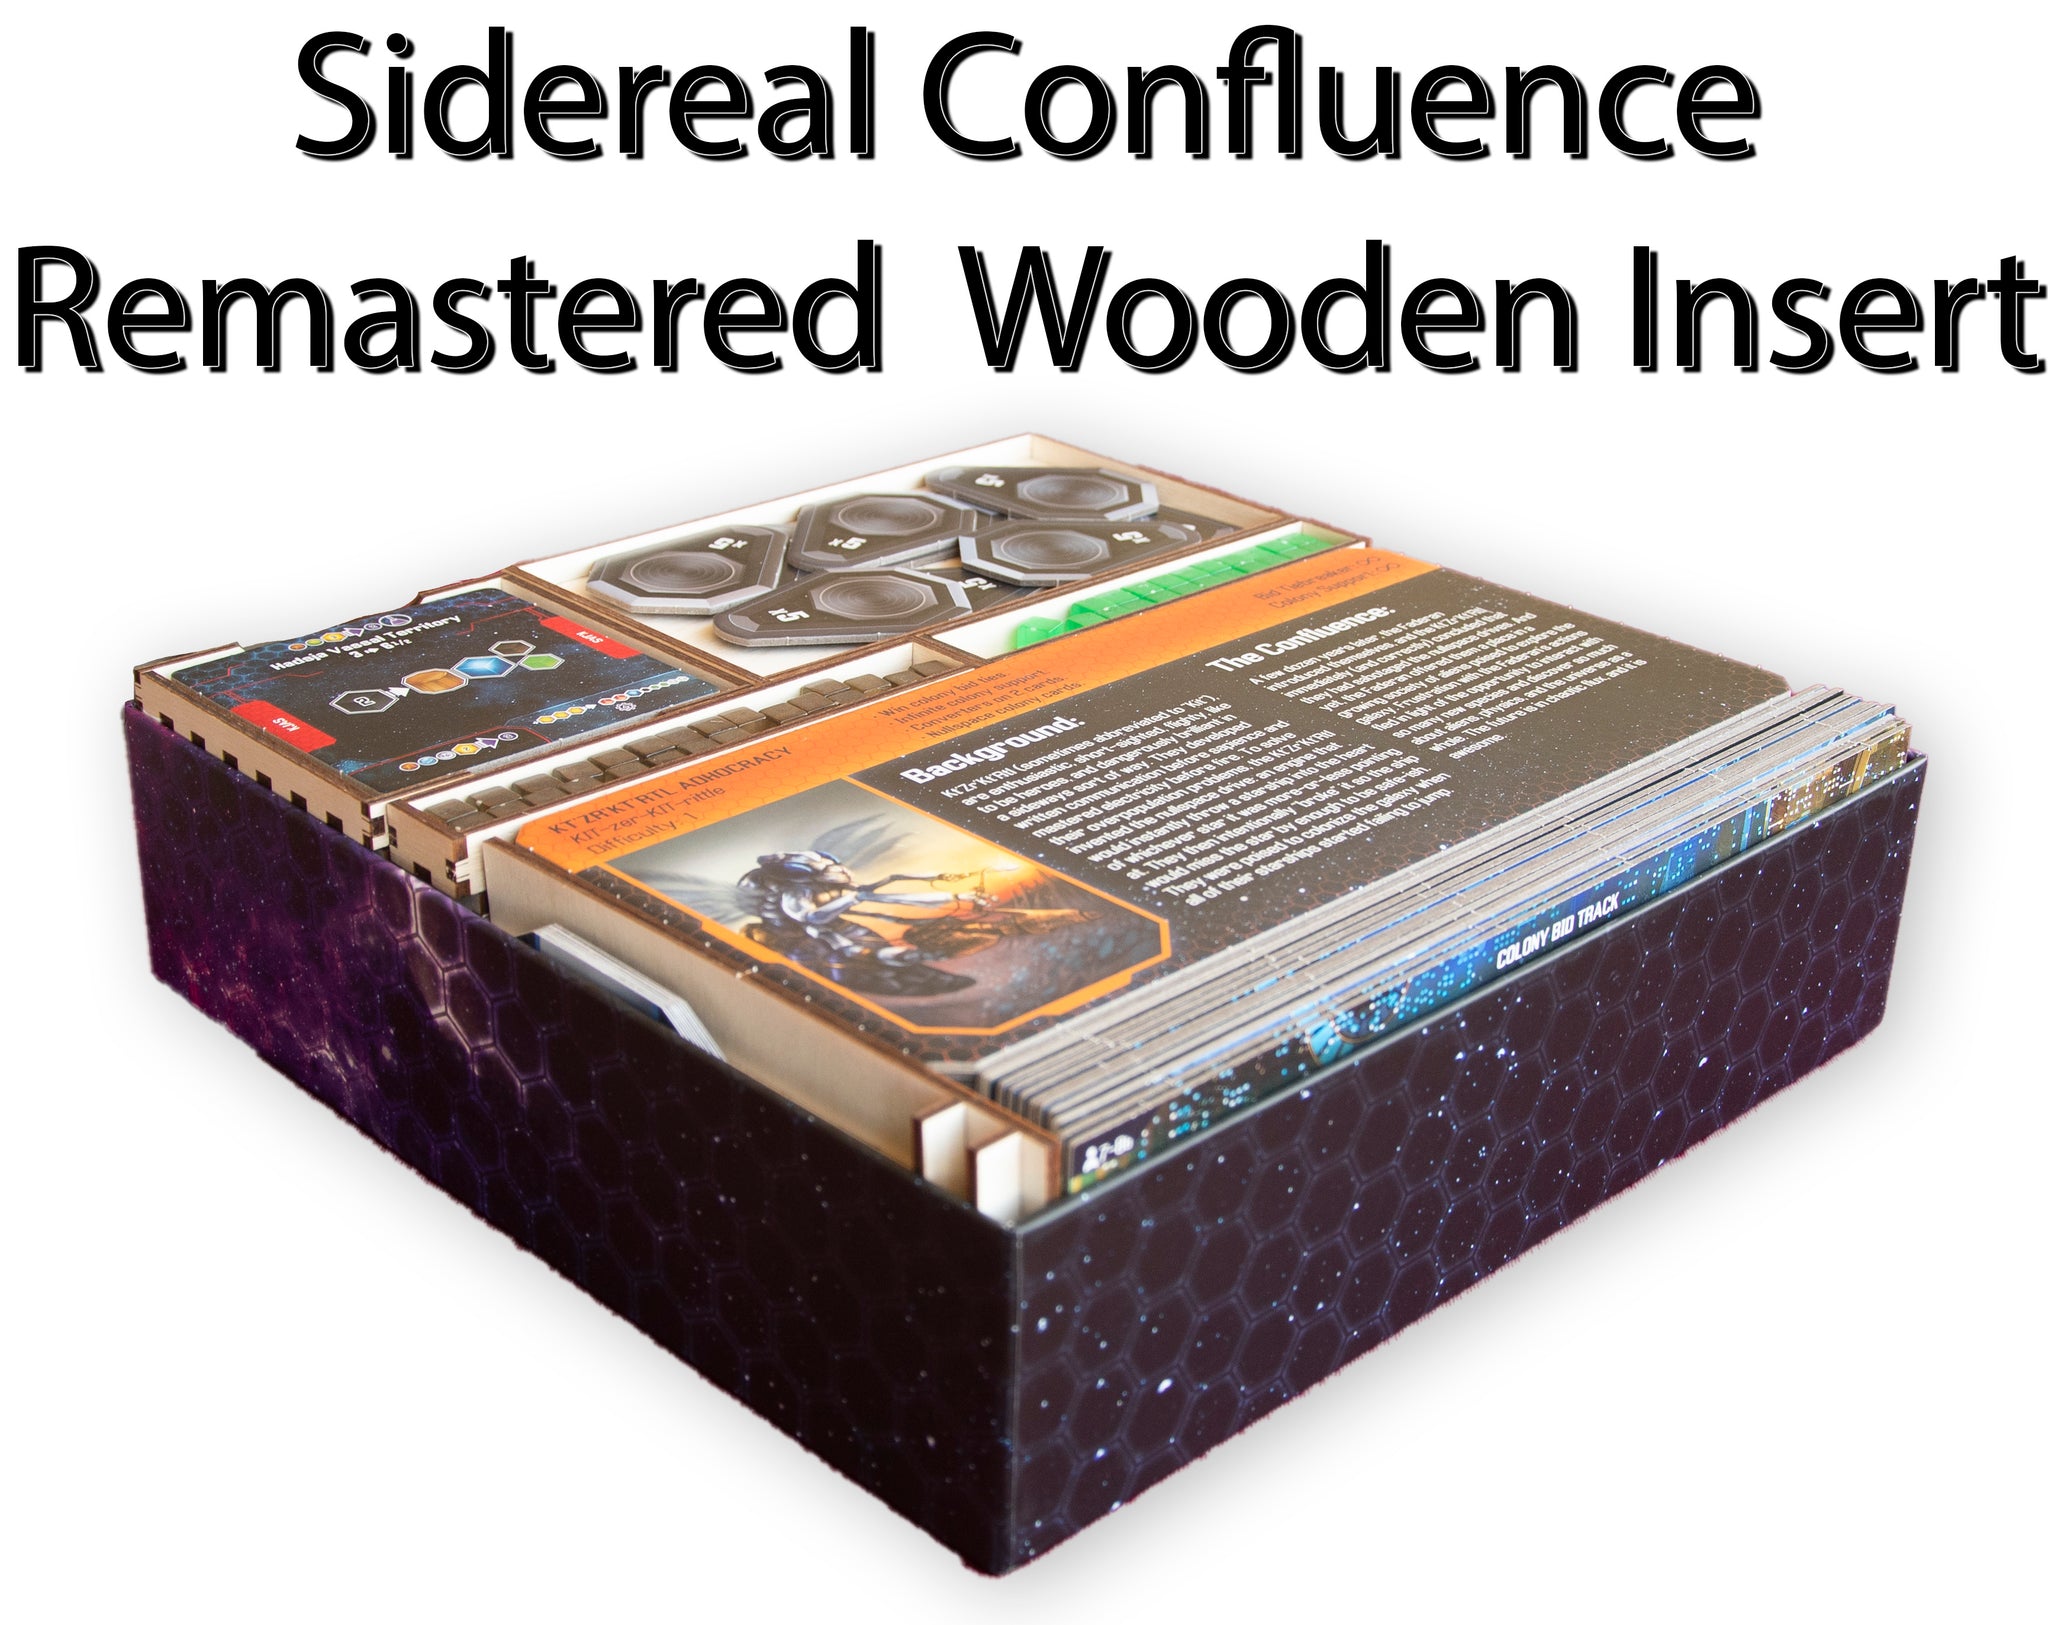 Sidereal Confluence Remastered Wooden Insert/Organizer